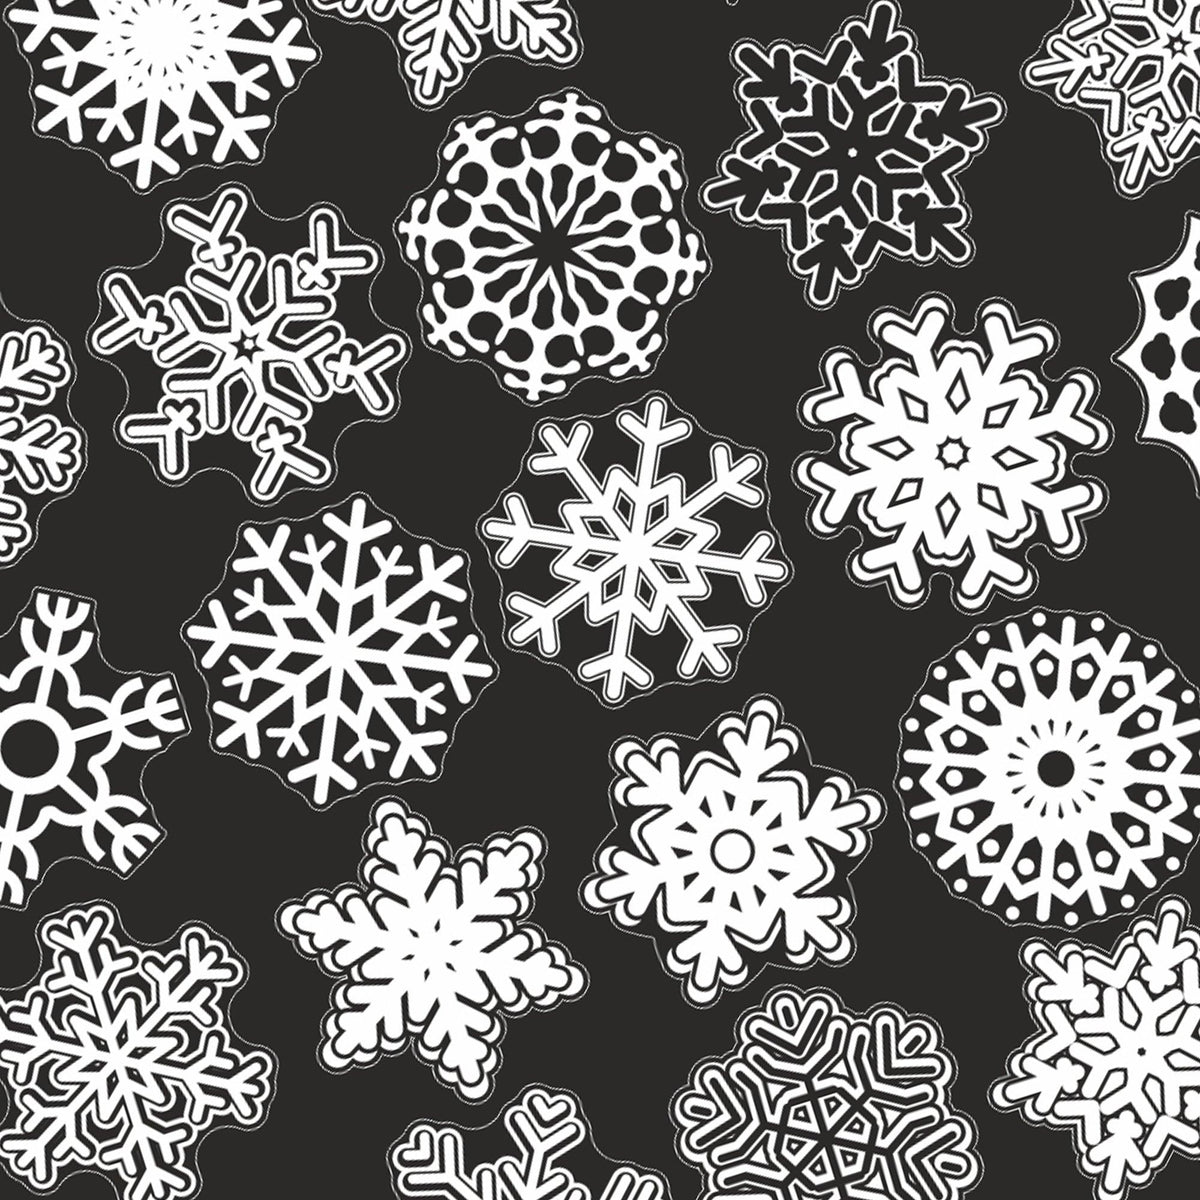 40 Unique 150mm Diameter Snowflakes Christmas Window Display